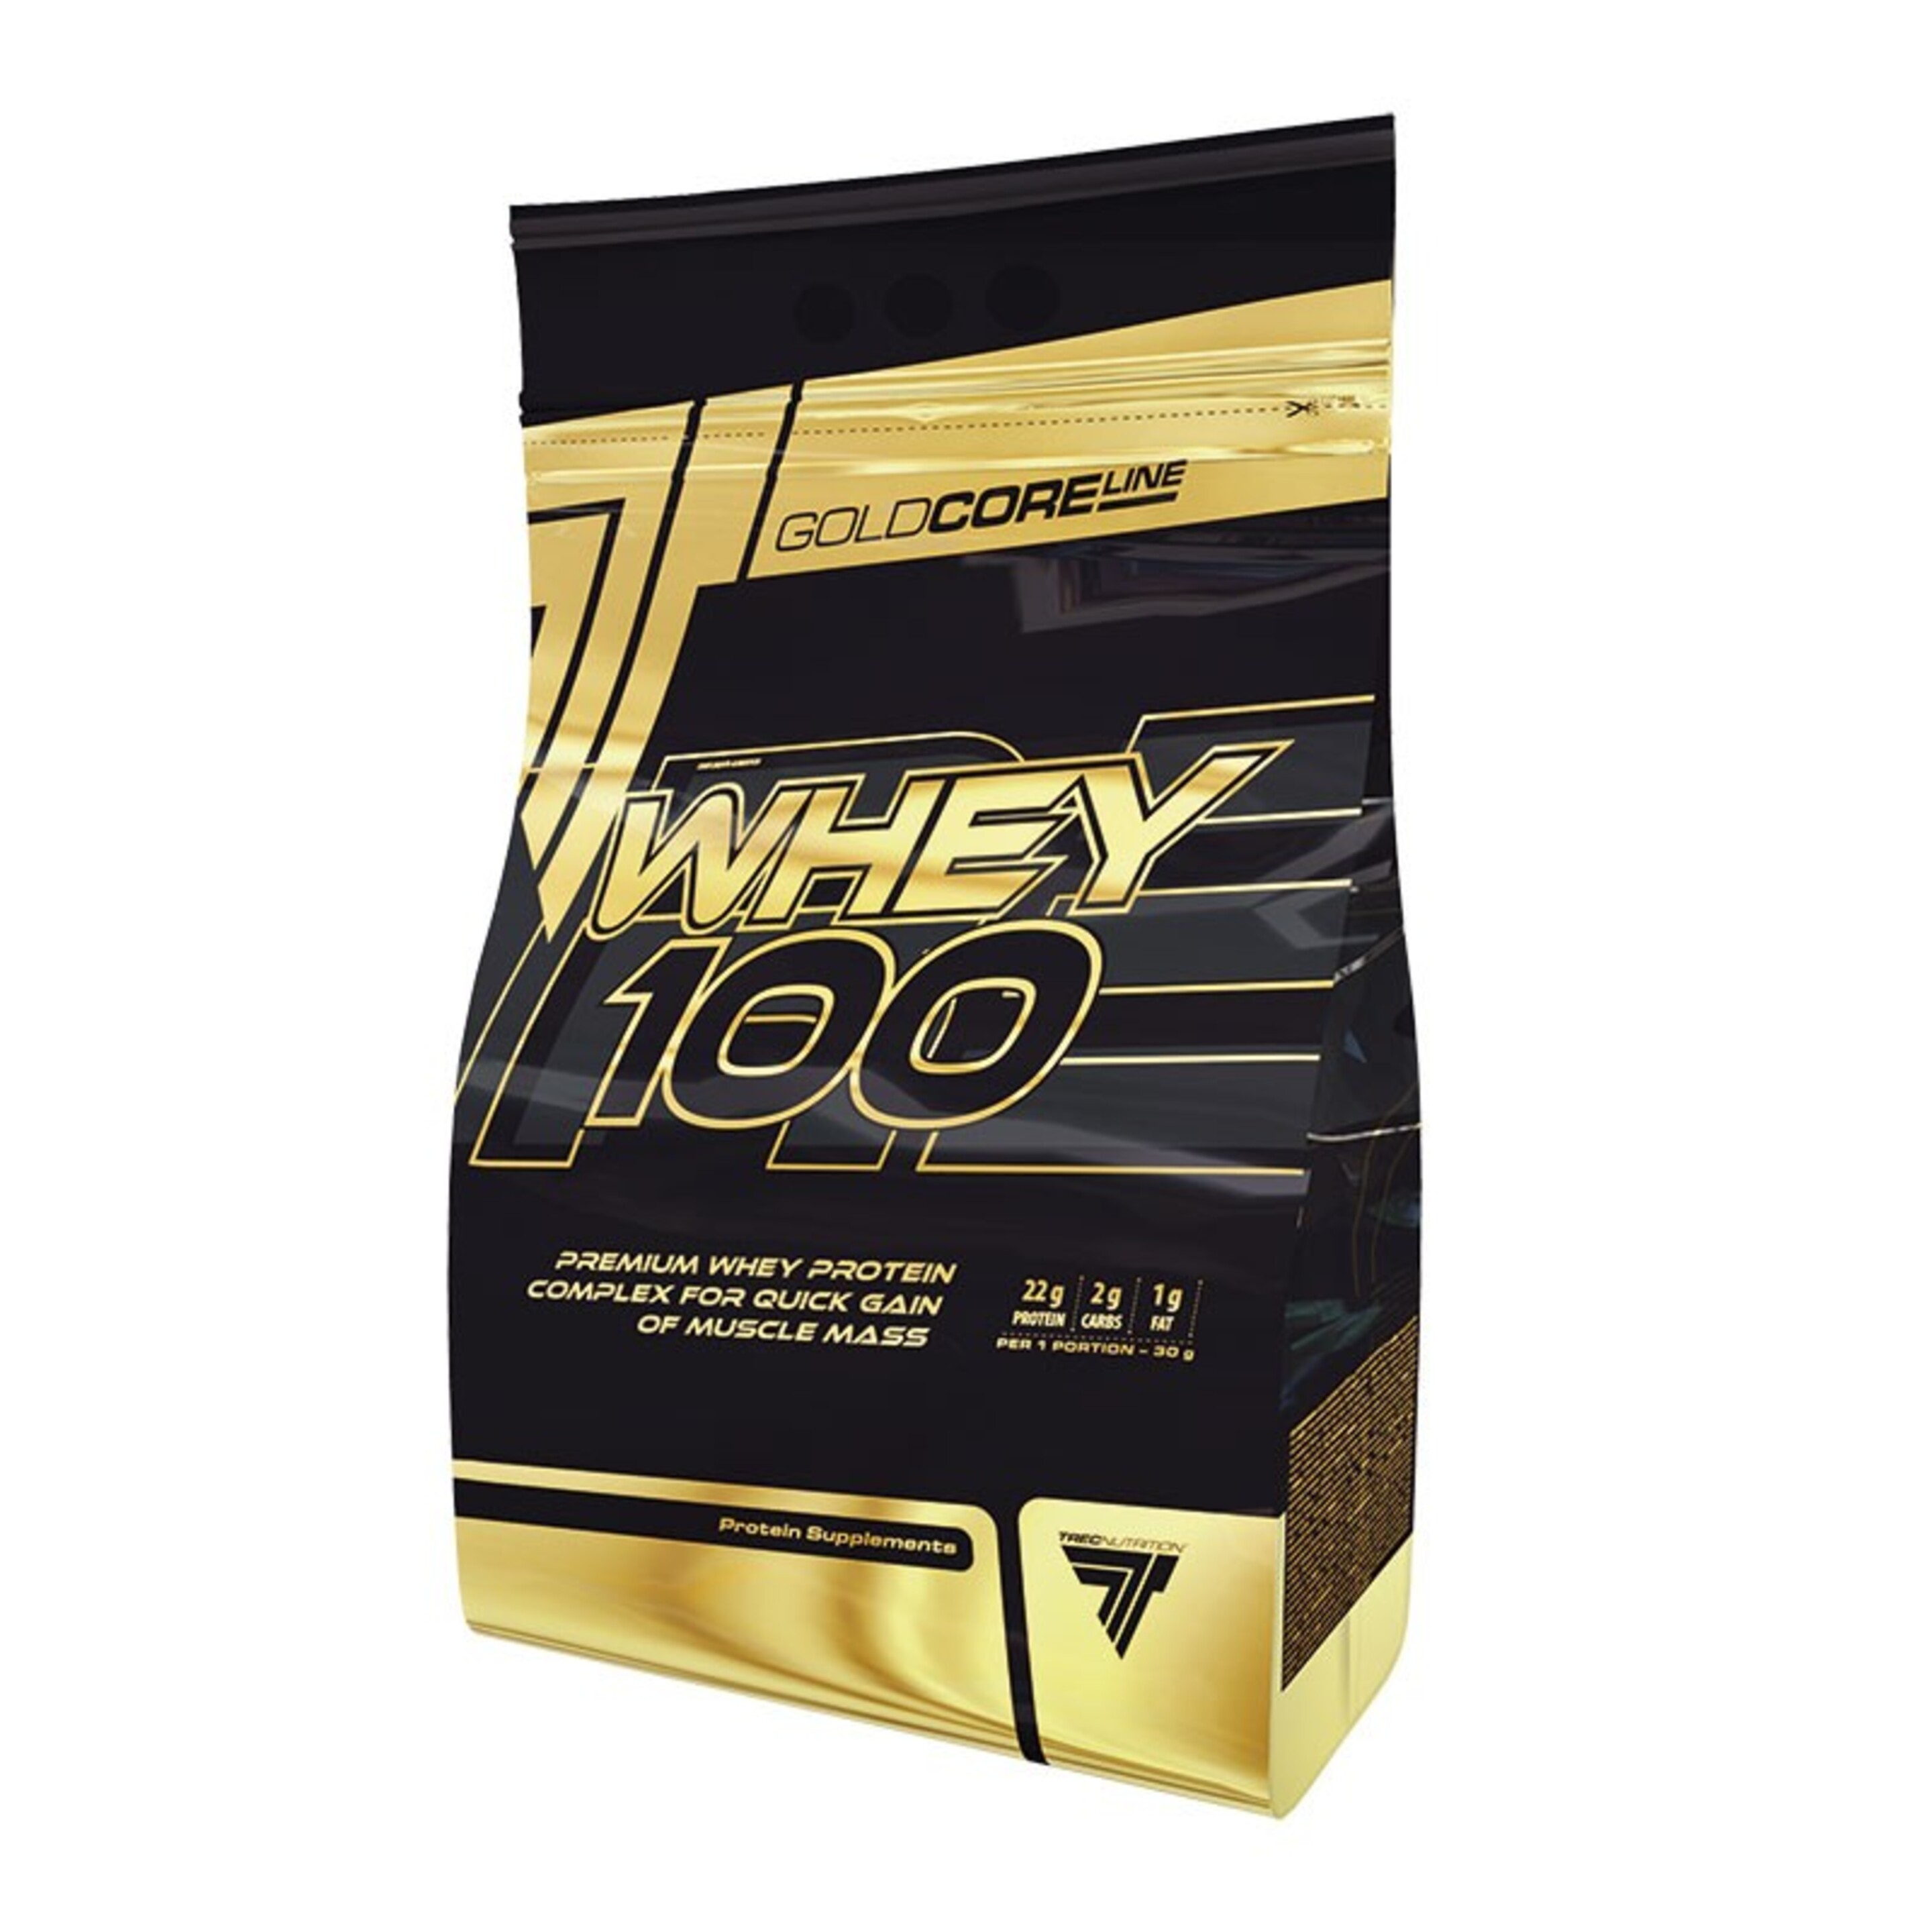 Gold Core Whey 100 - 2275g - Chocolate